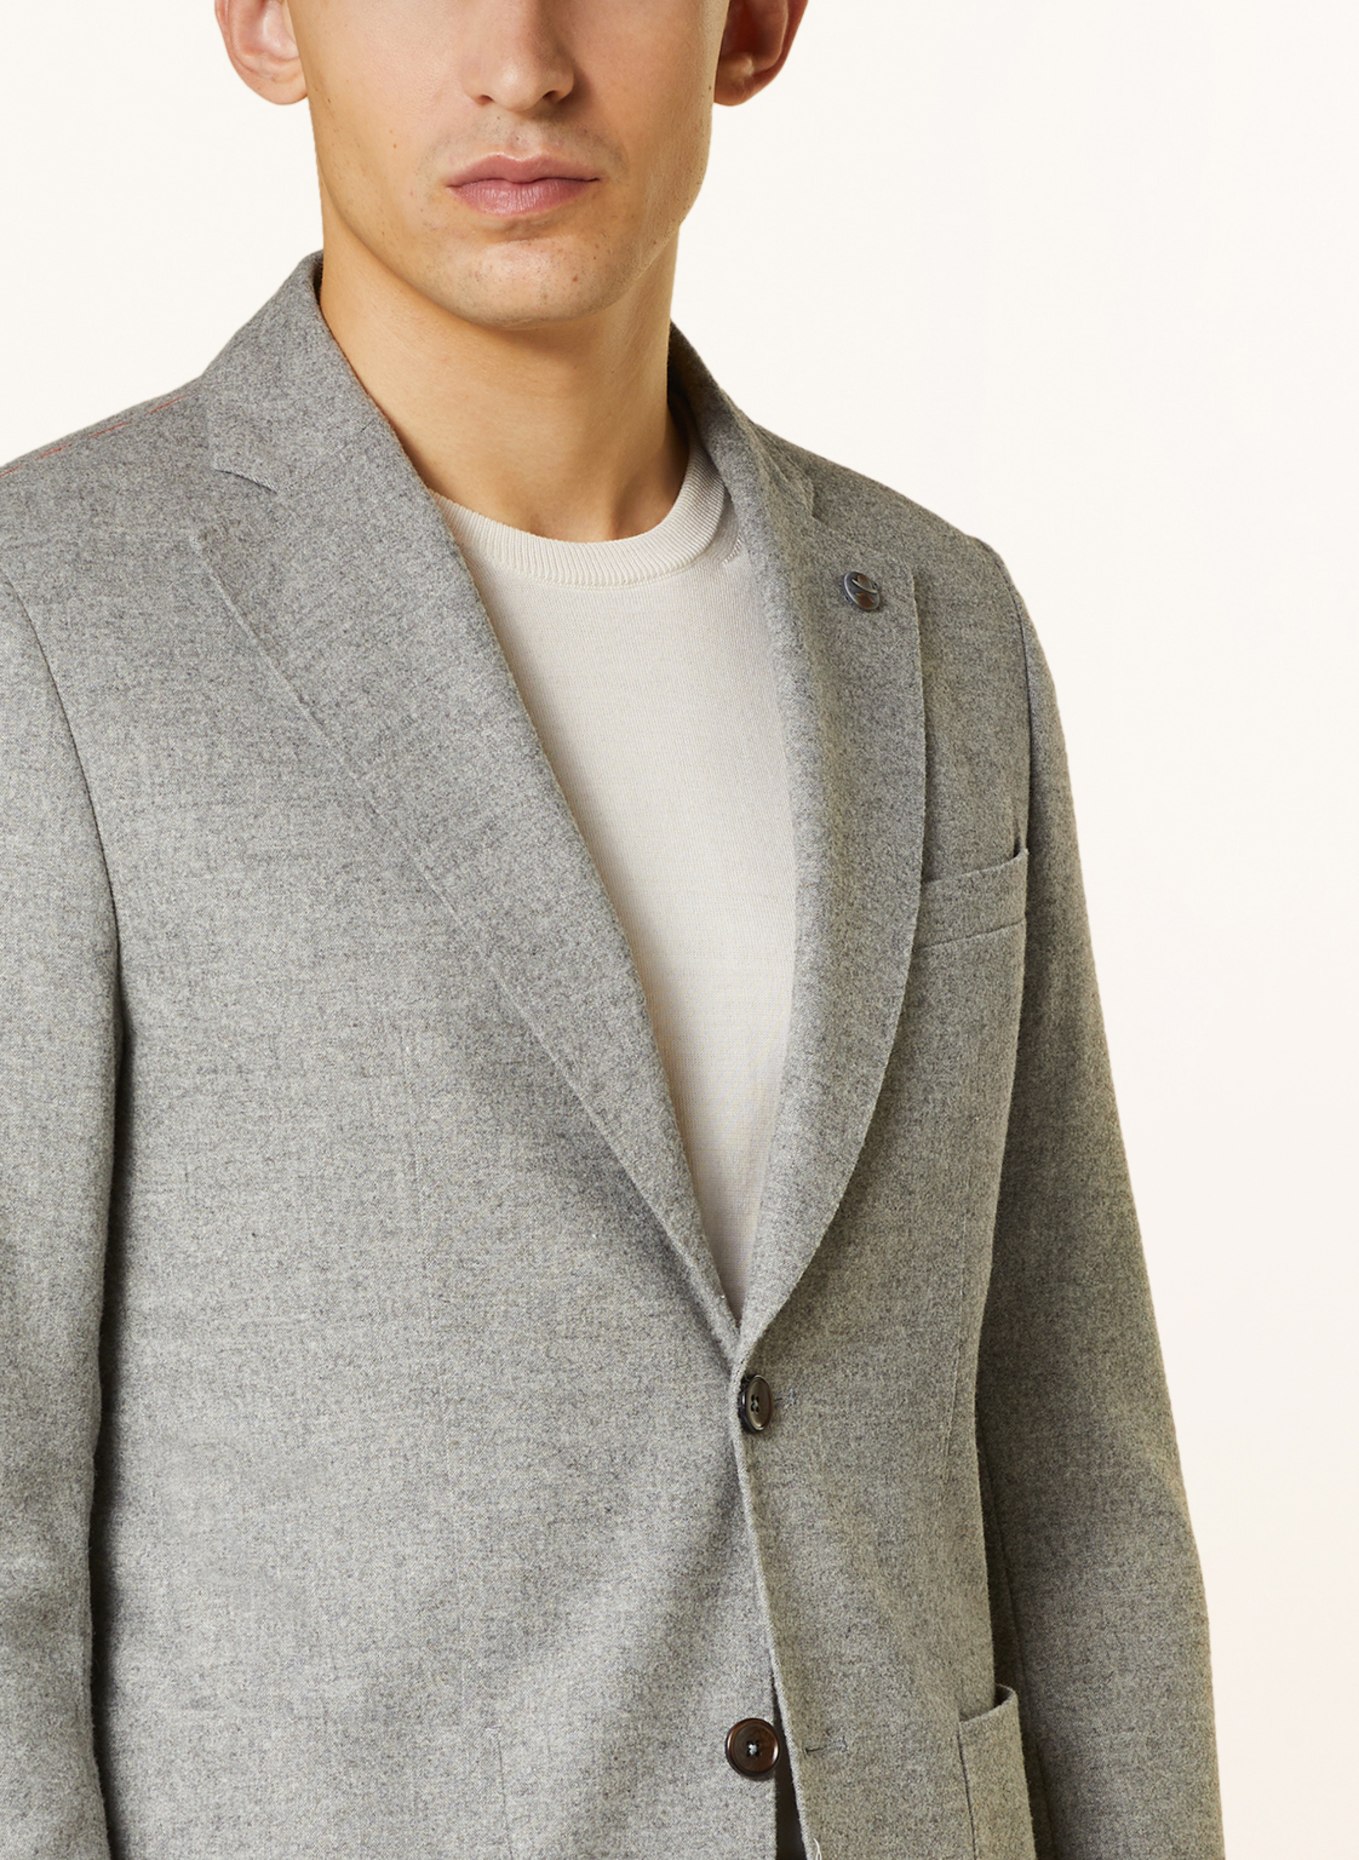 CG - CLUB of GENTS Suit jacket CG CONLEY slim fit, Color: 81 grau hell (Image 5)